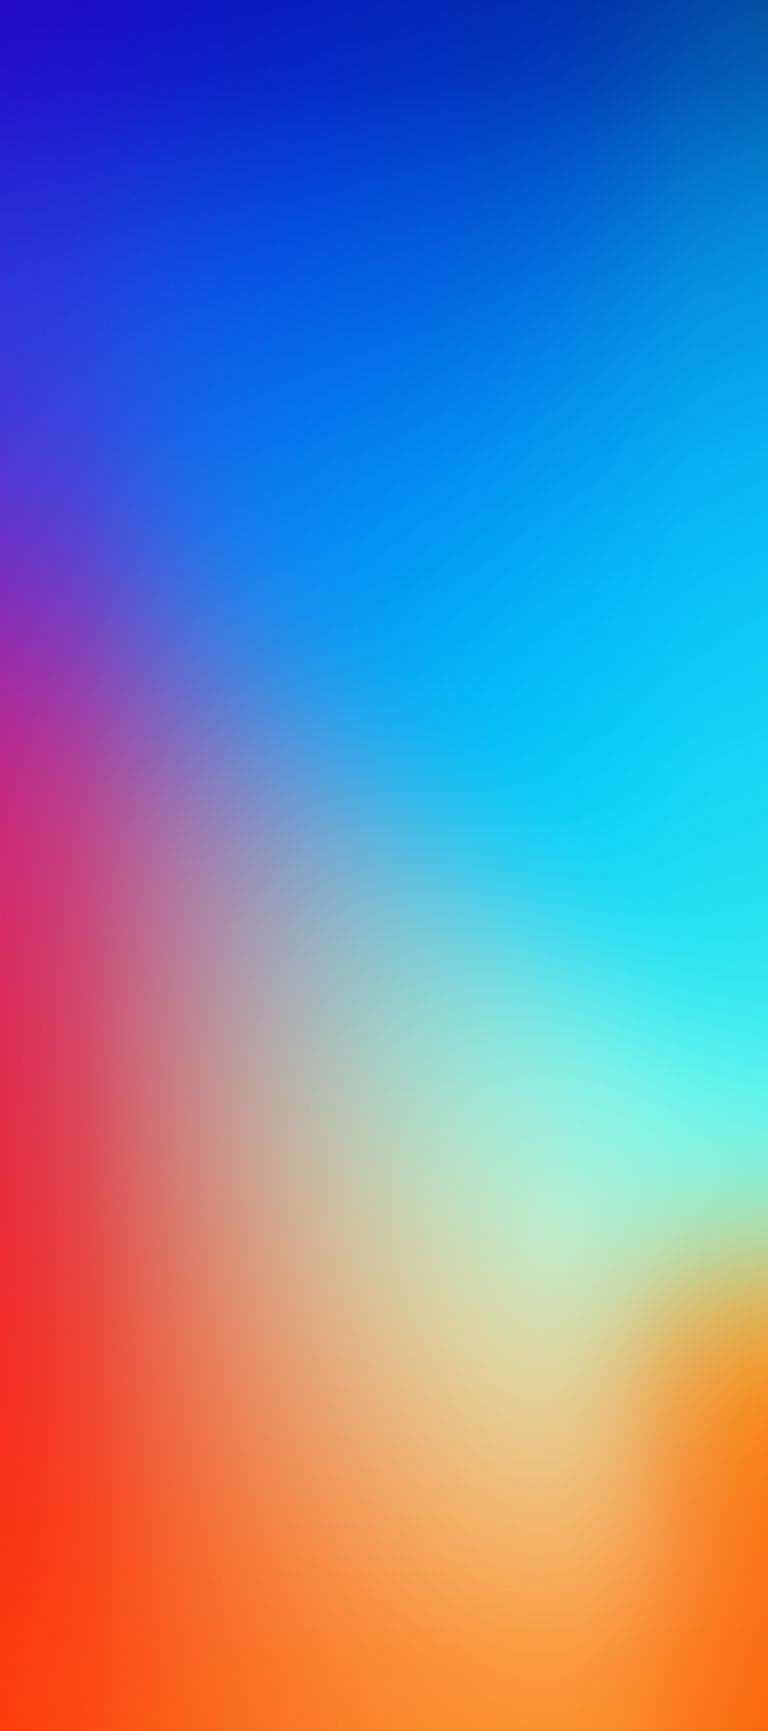 gradient v38 by @EvgeniyZemelko on Twitter | Zollotech